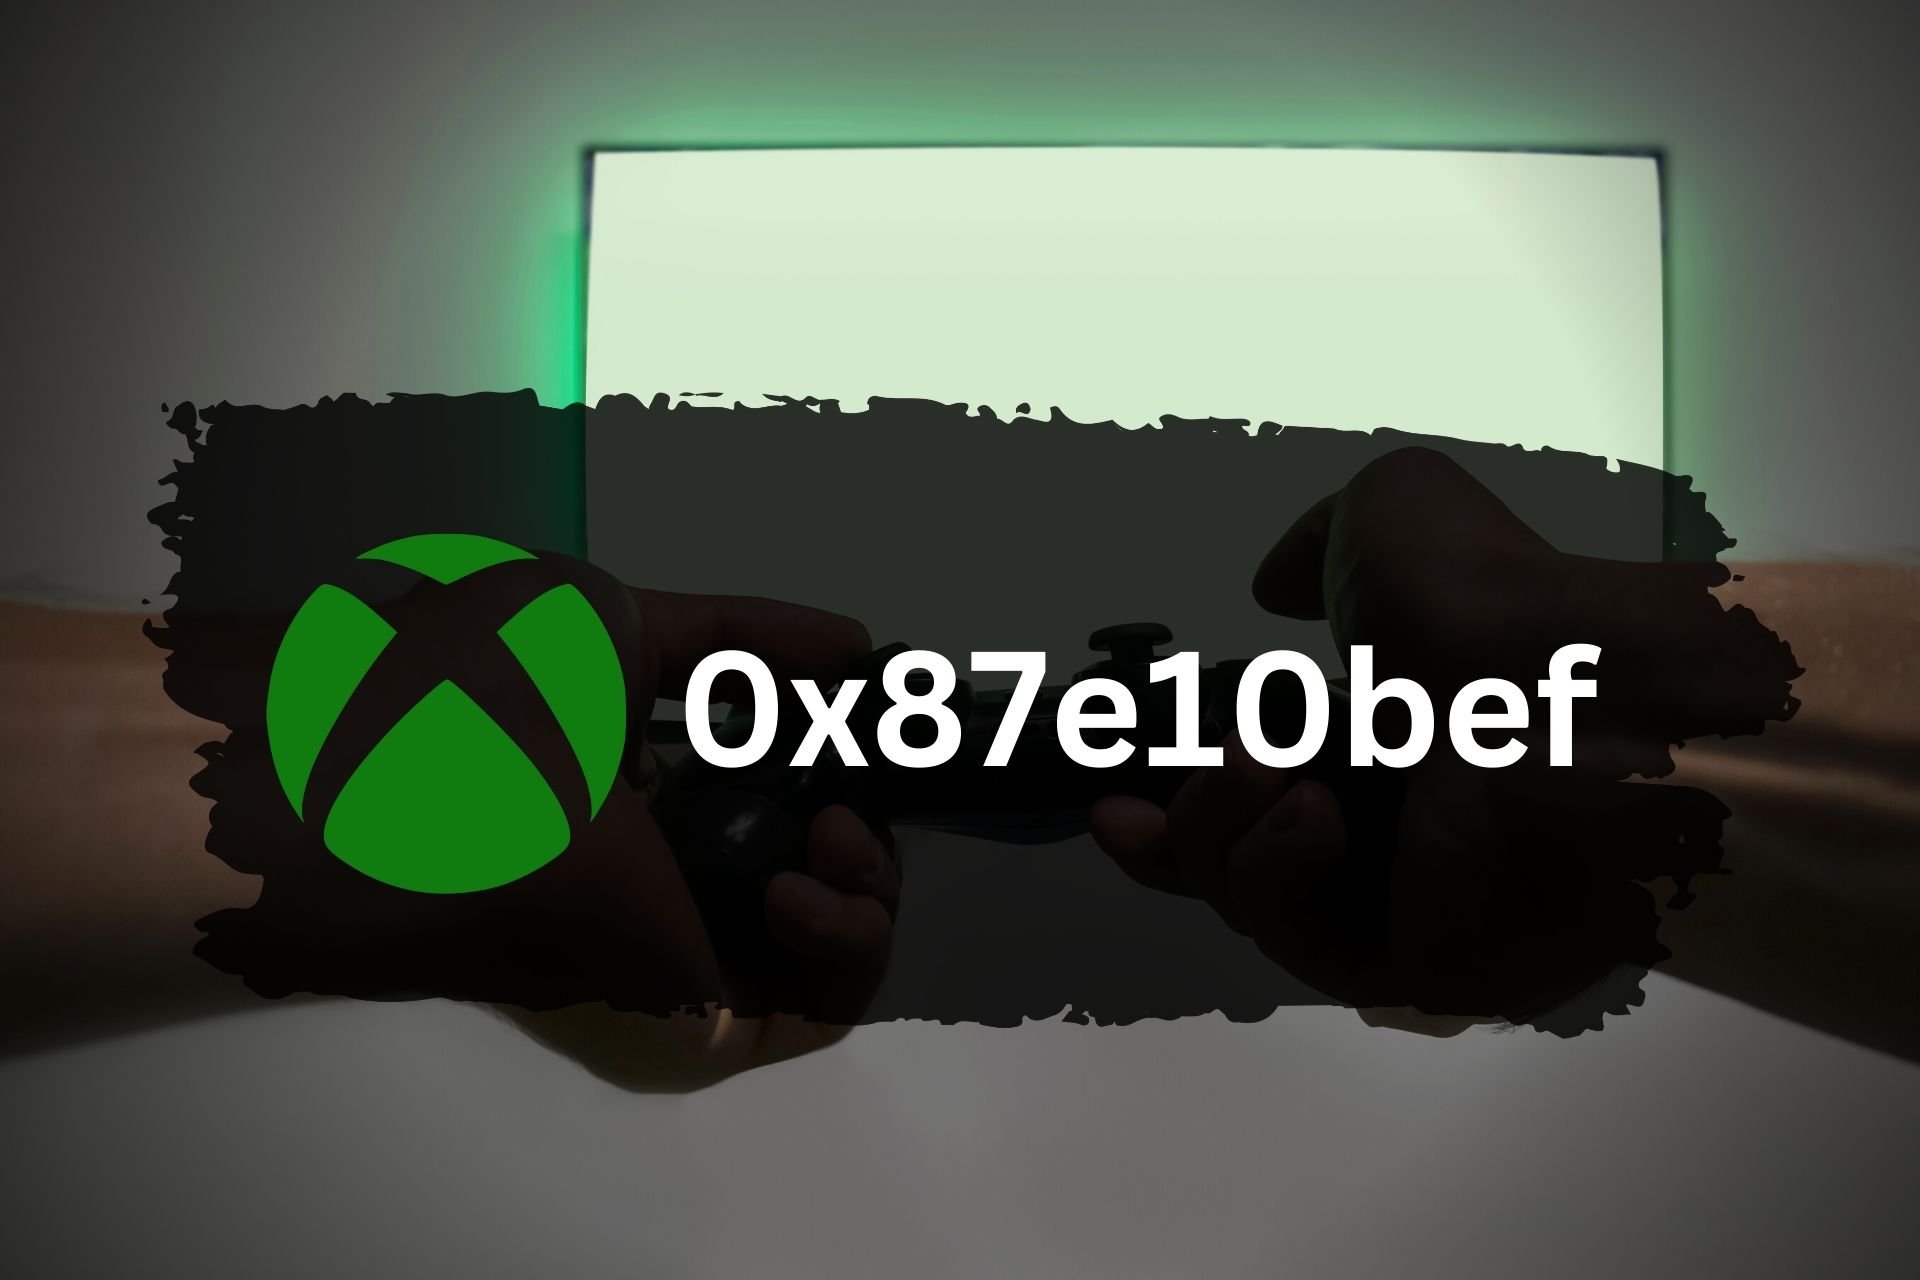 fix xbox error code 0x87e10bef featured